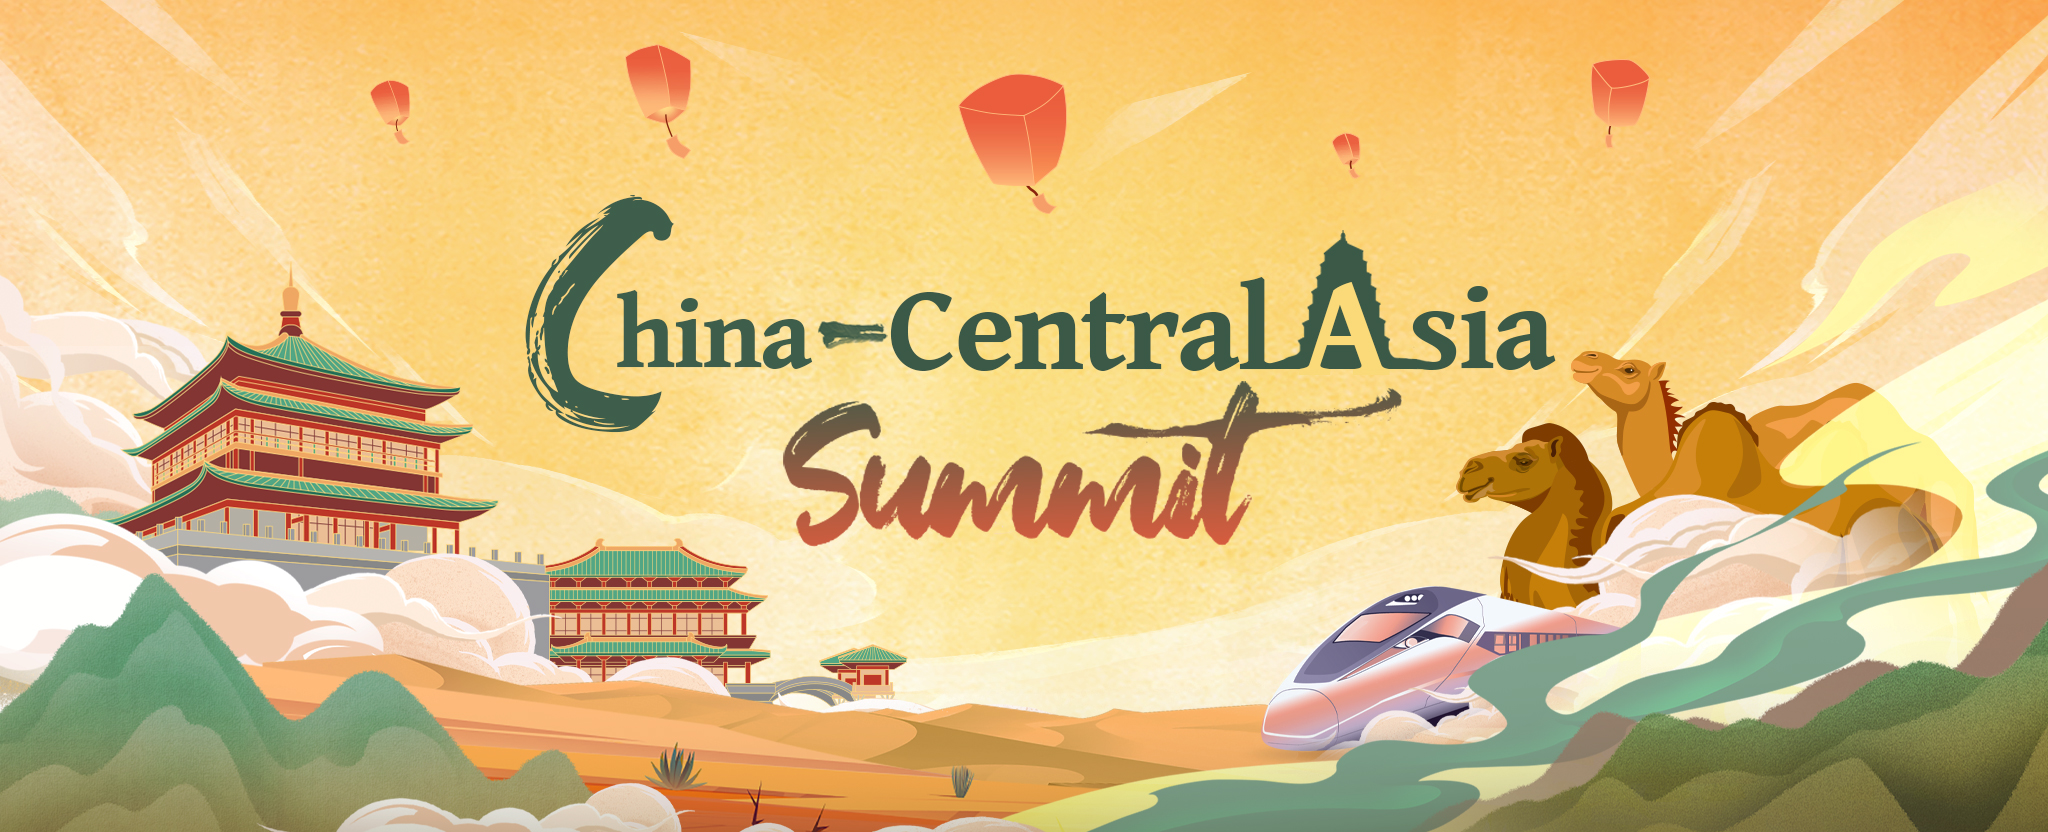 China-Central Asia Summit | CGTN